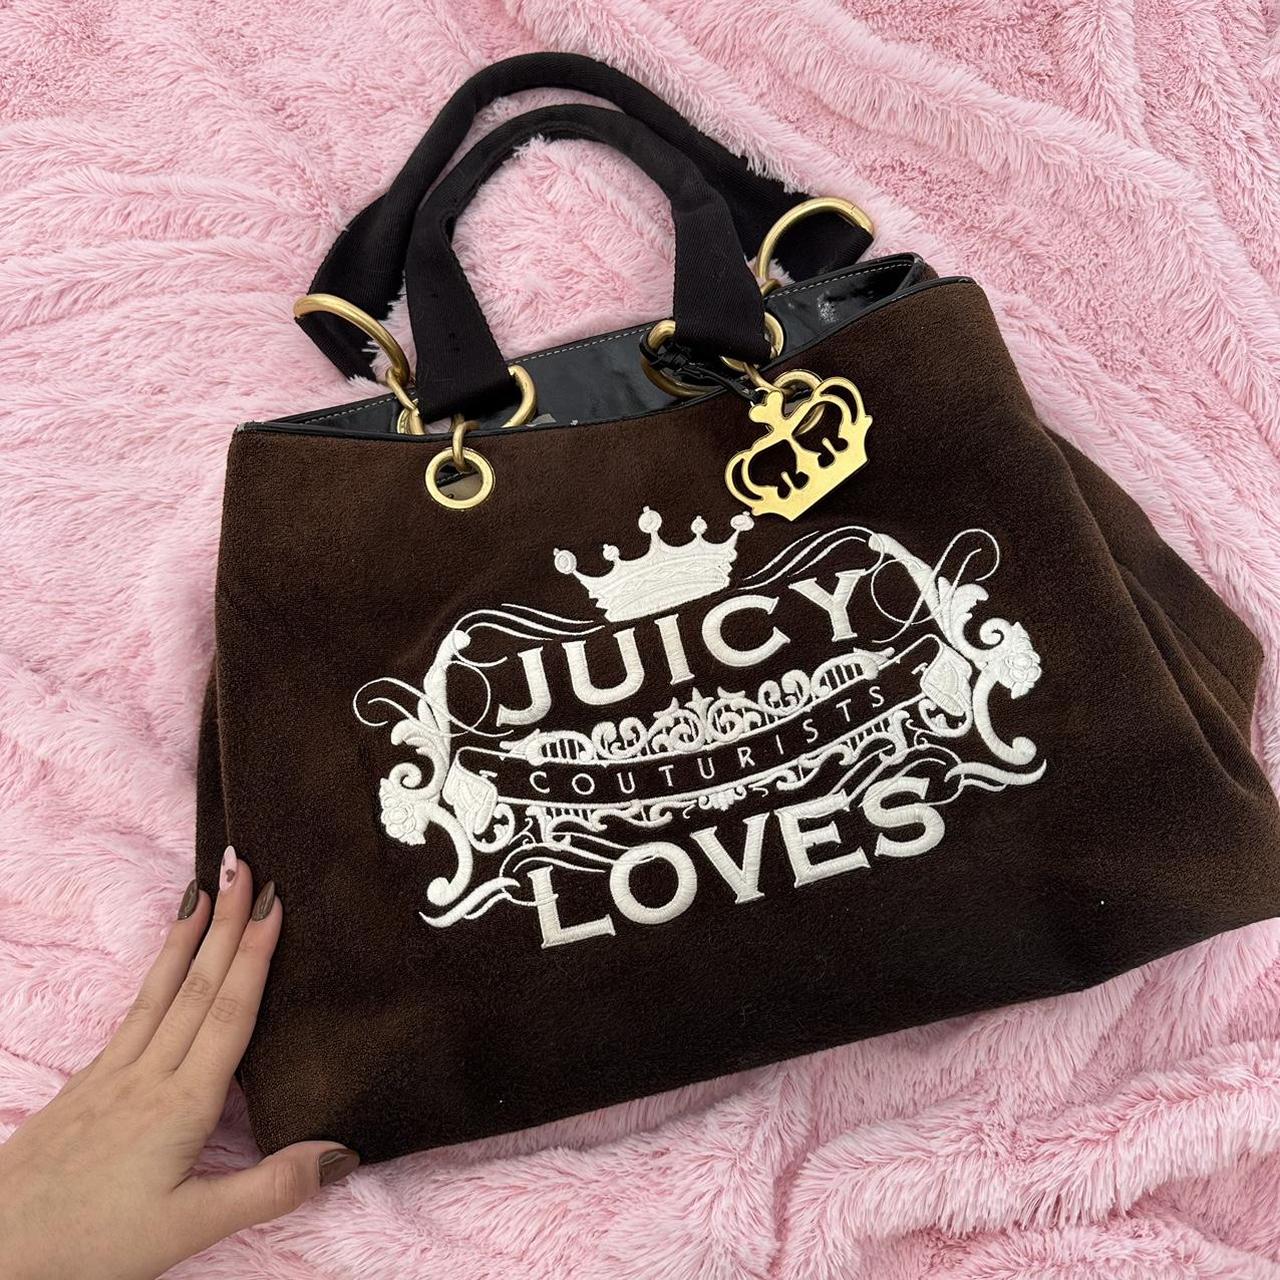 Juicy Couture Crown Heart Velour Velvet Black Hobo Bag W/Wallet | eBay